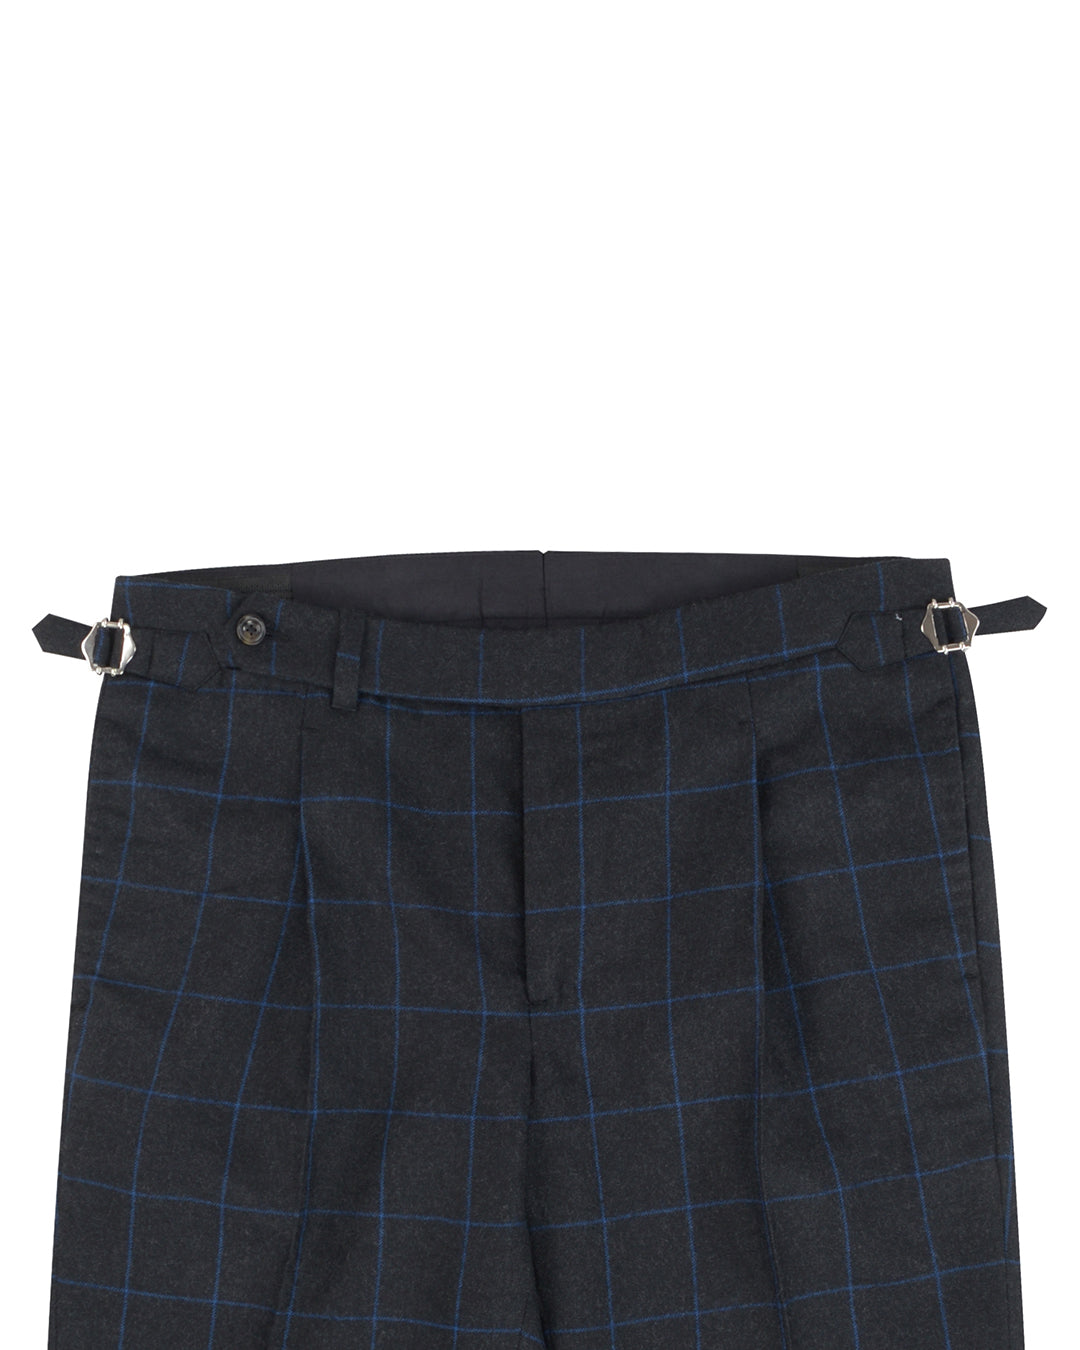 Minnis Flannel: Charcoal Blue Twill Pants